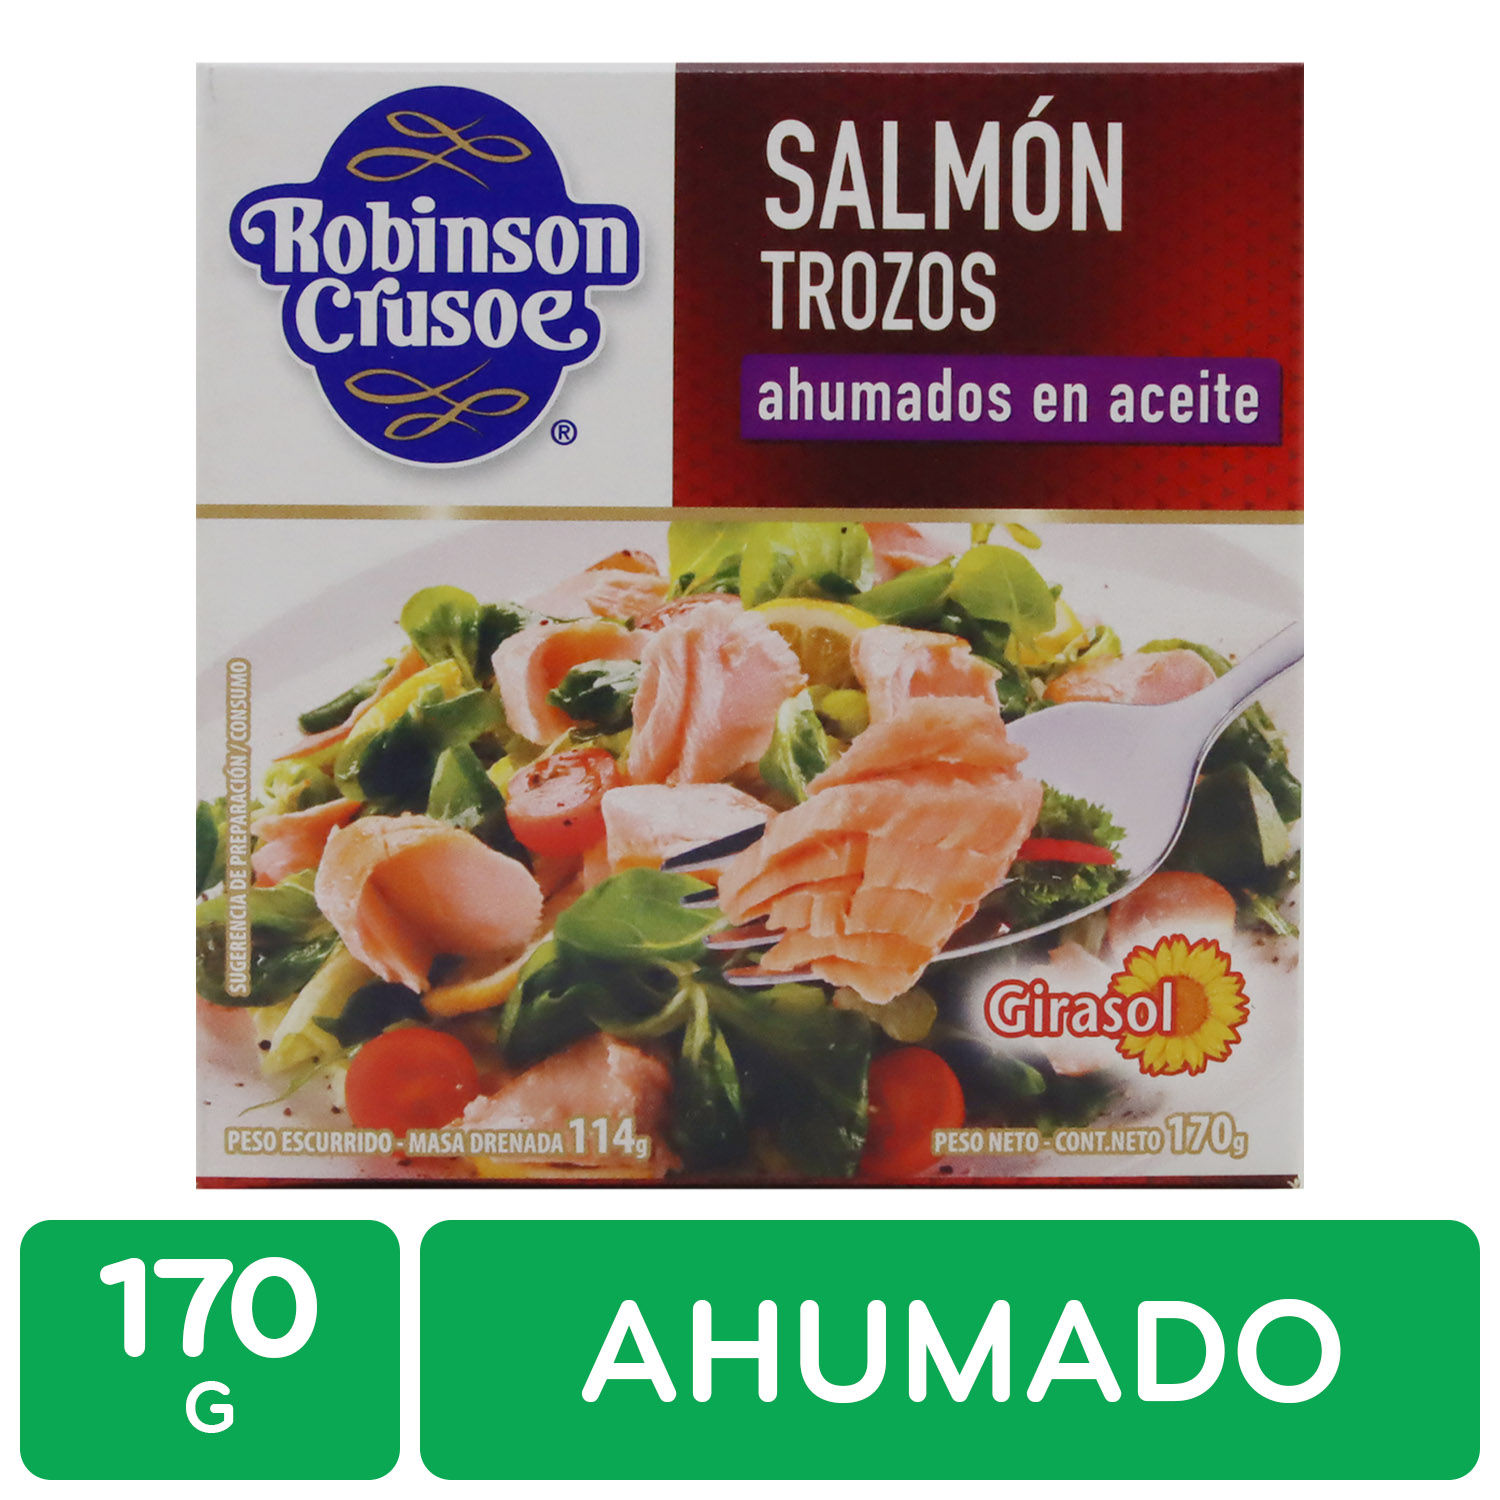 Salmon Ahumado Aceite Trozos Robinson Crusoe